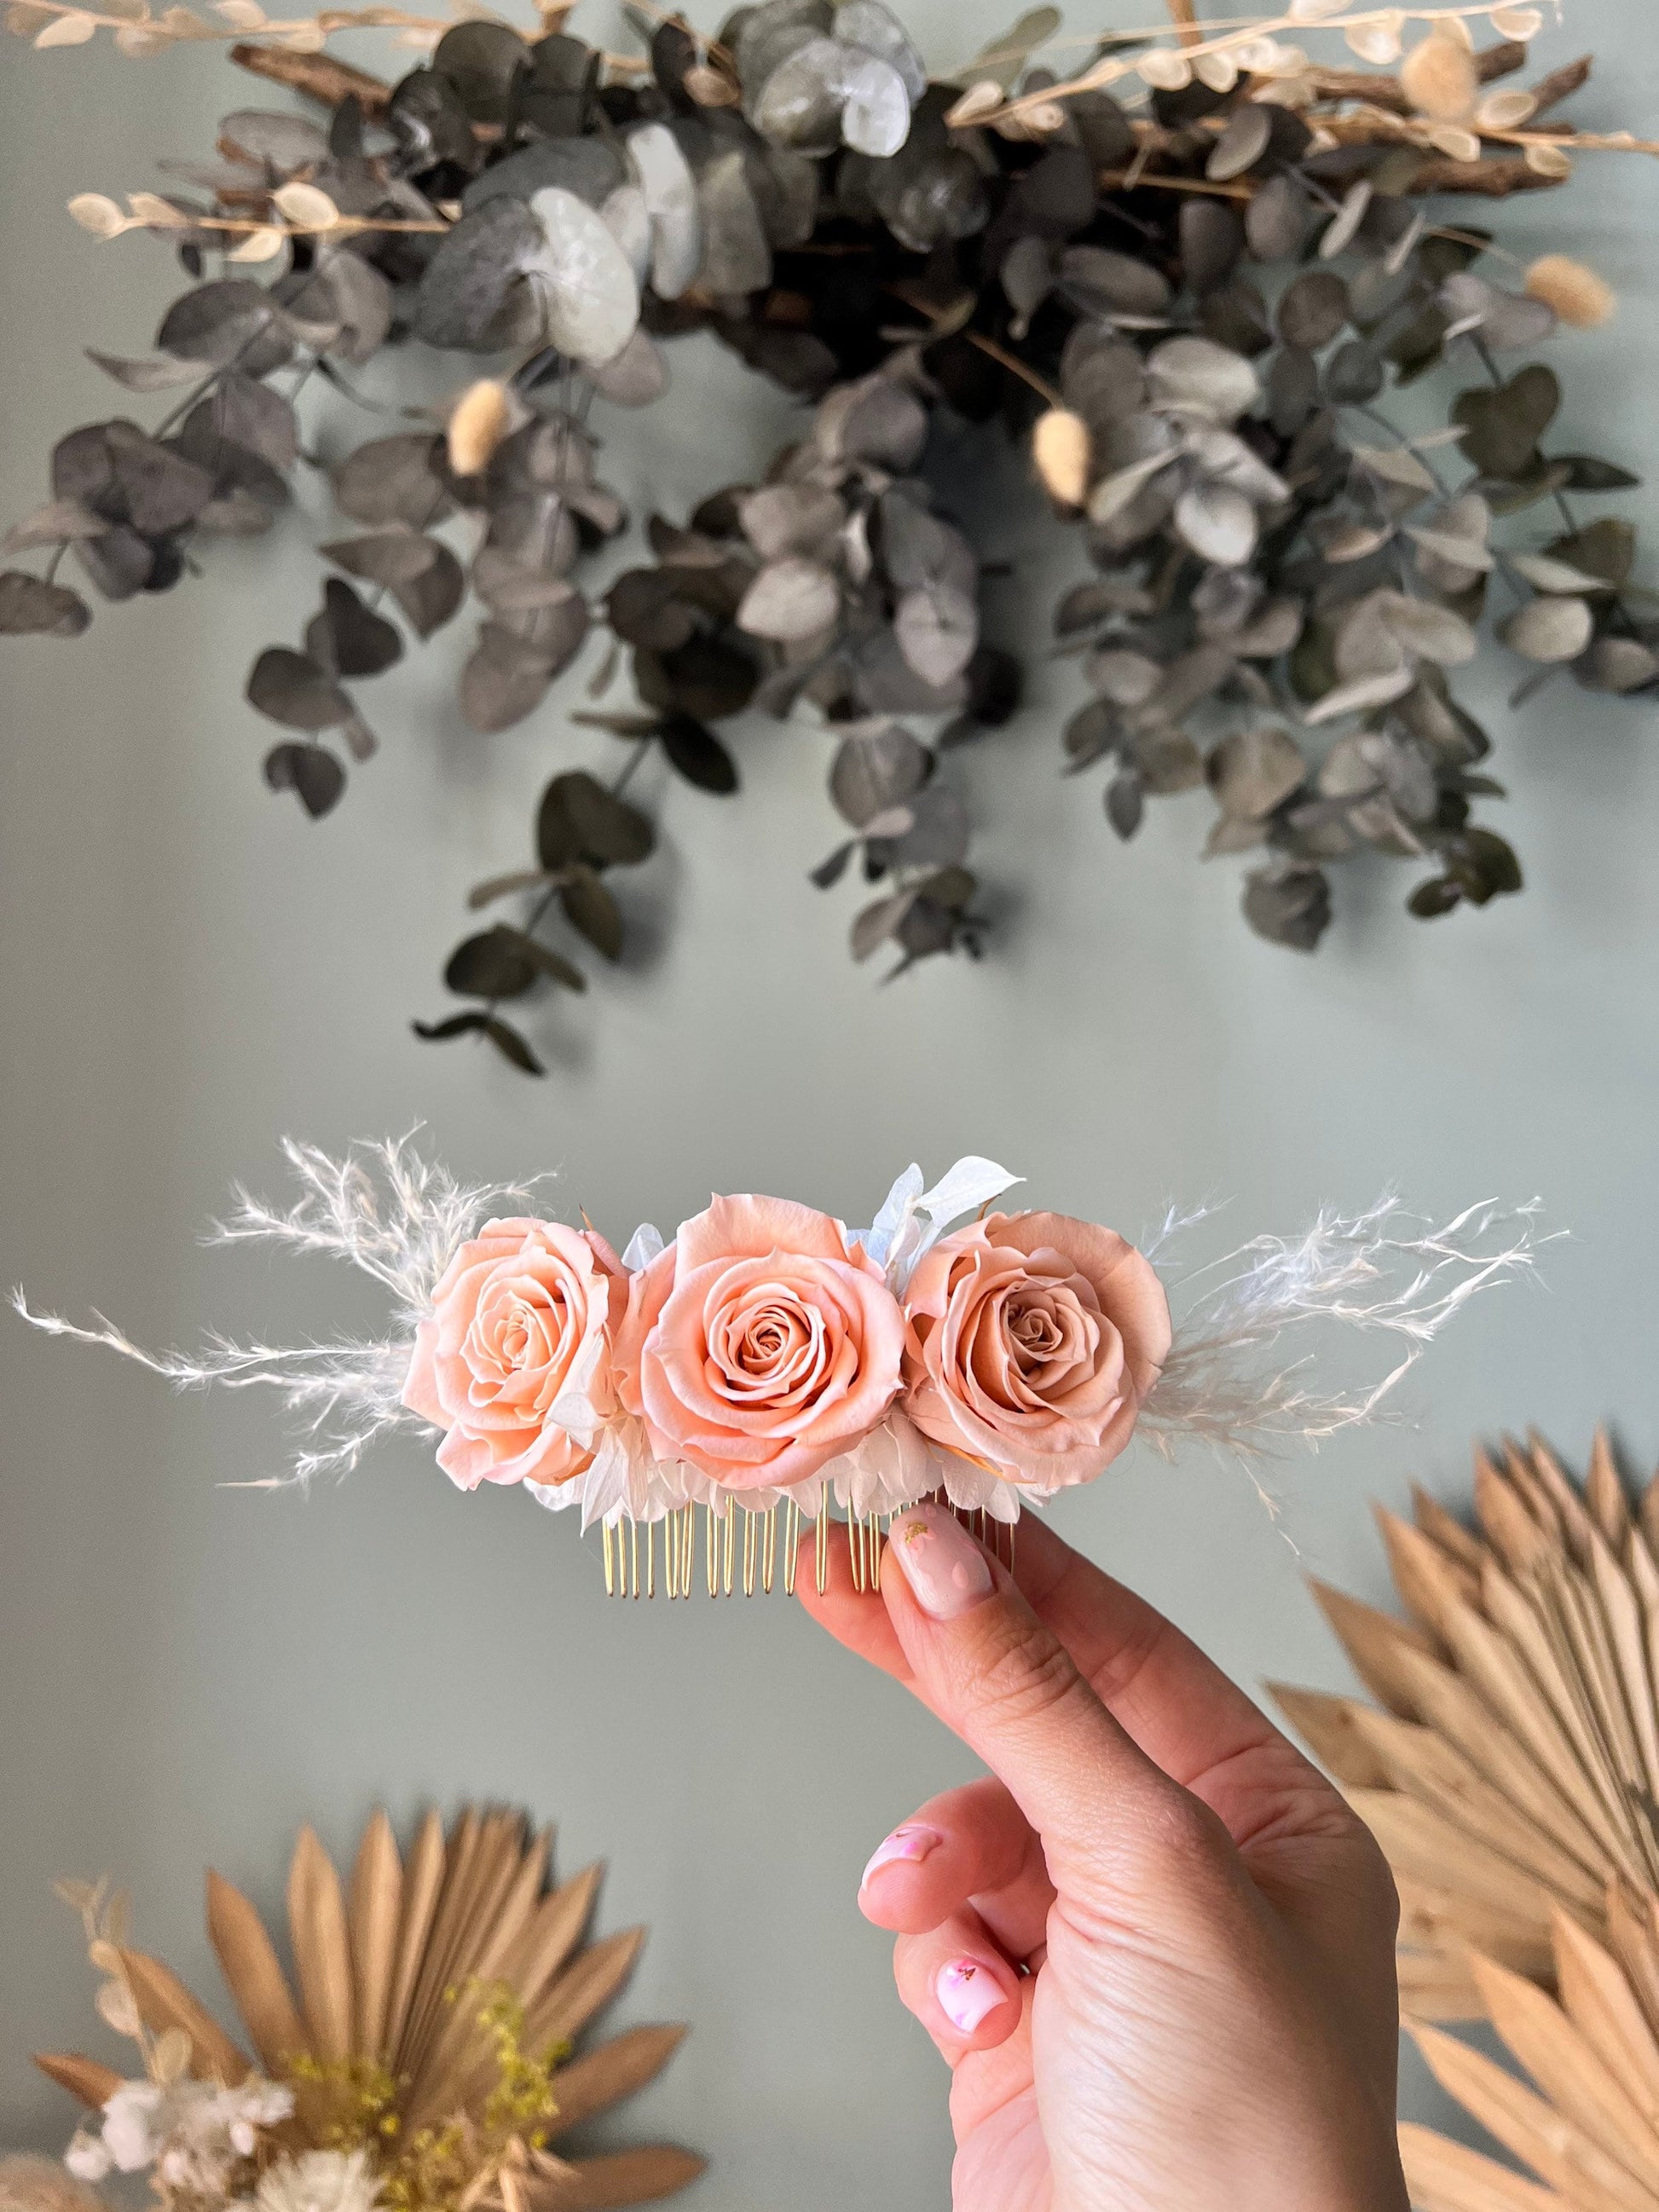 Personalised Pink Dried Preserved Flowers as Mini Everlasting -  Norway